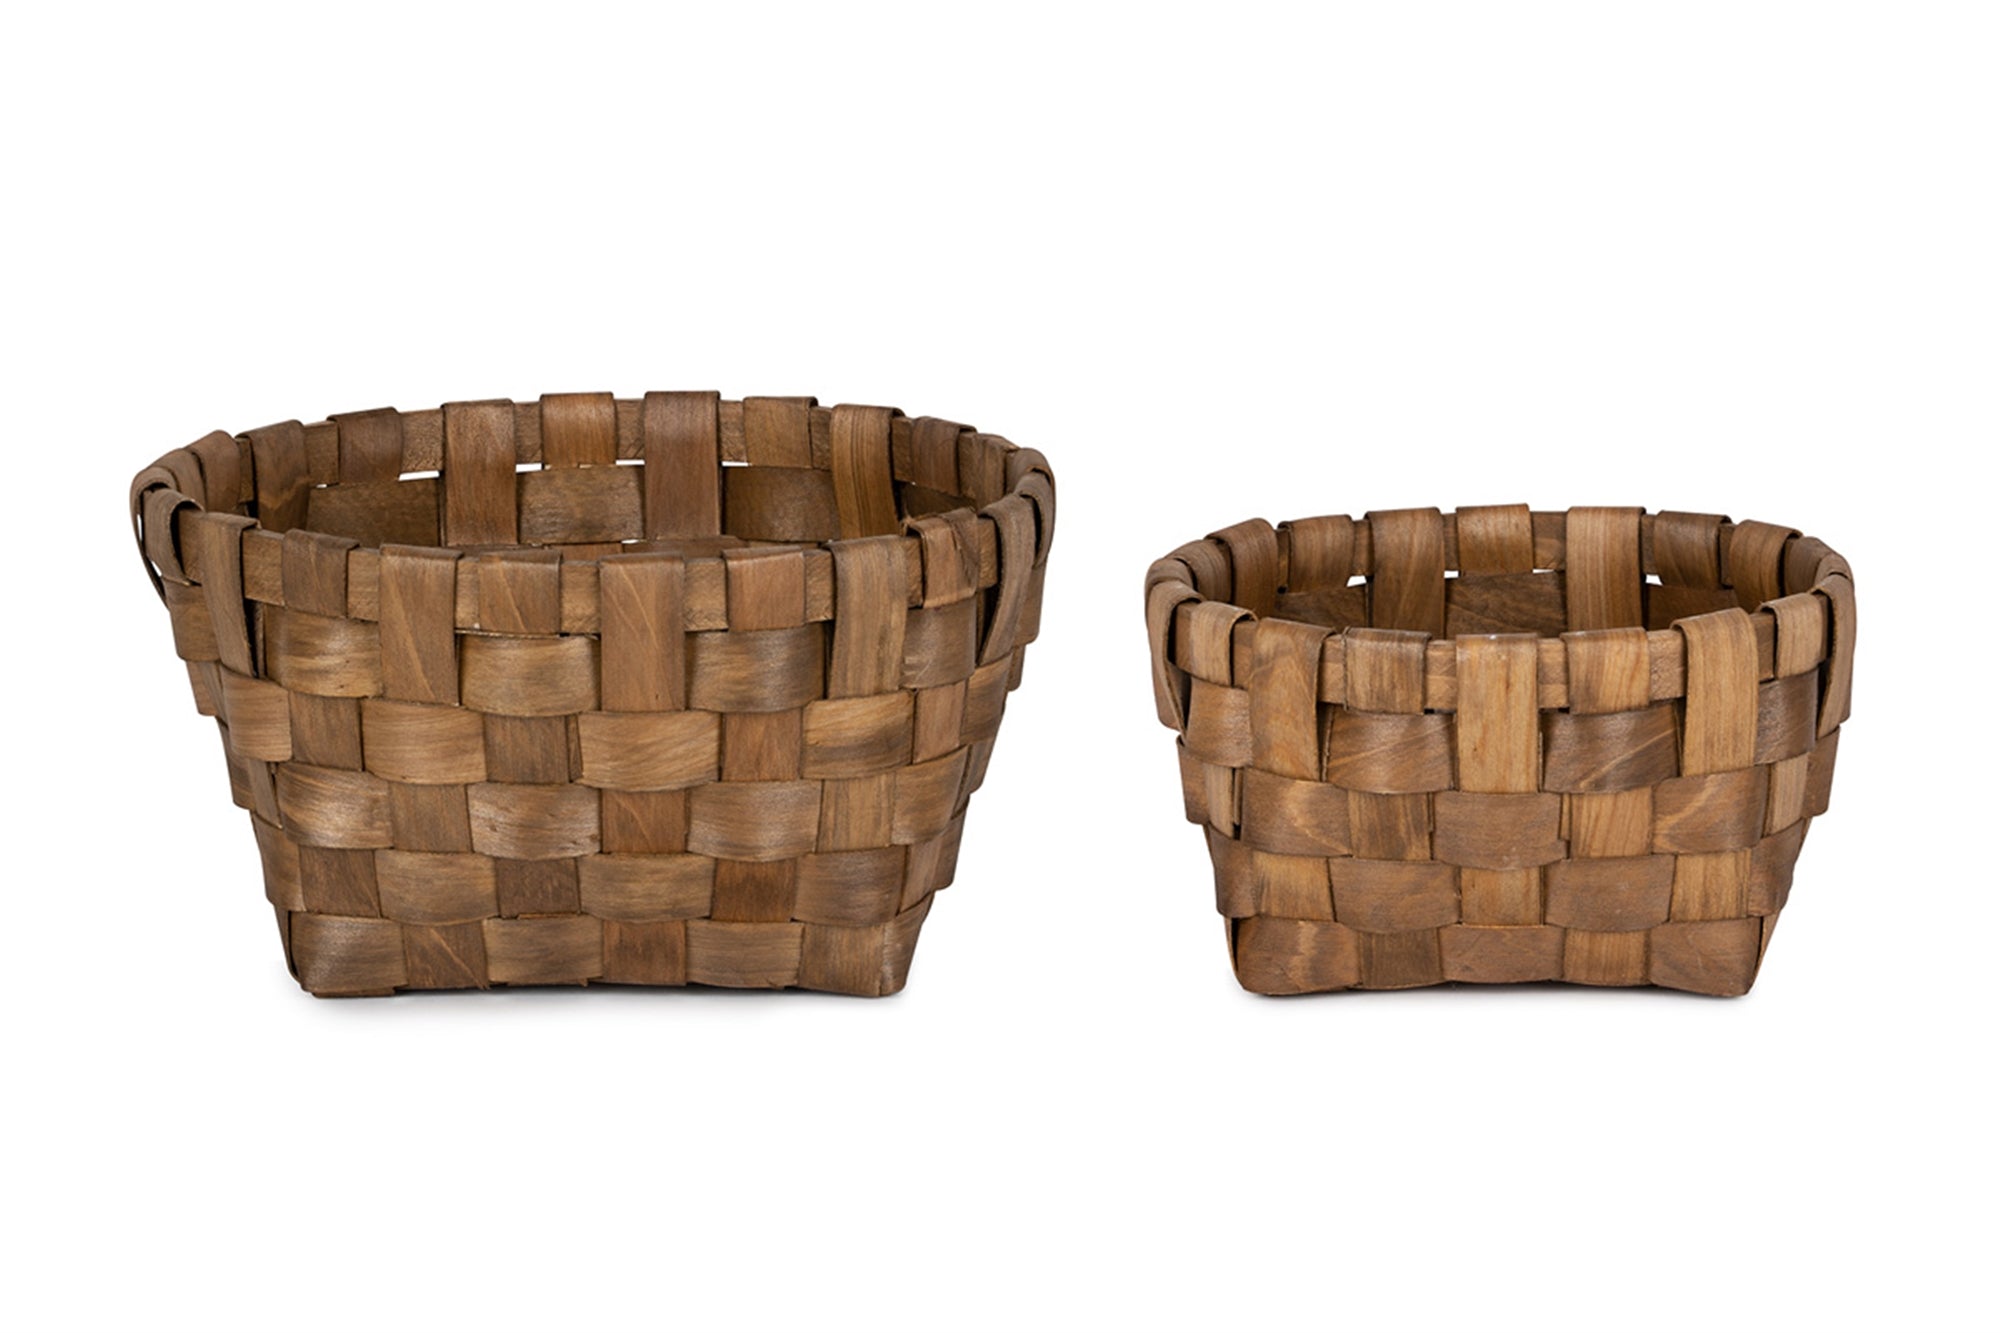 Woven Wooden Baskets (S/2)